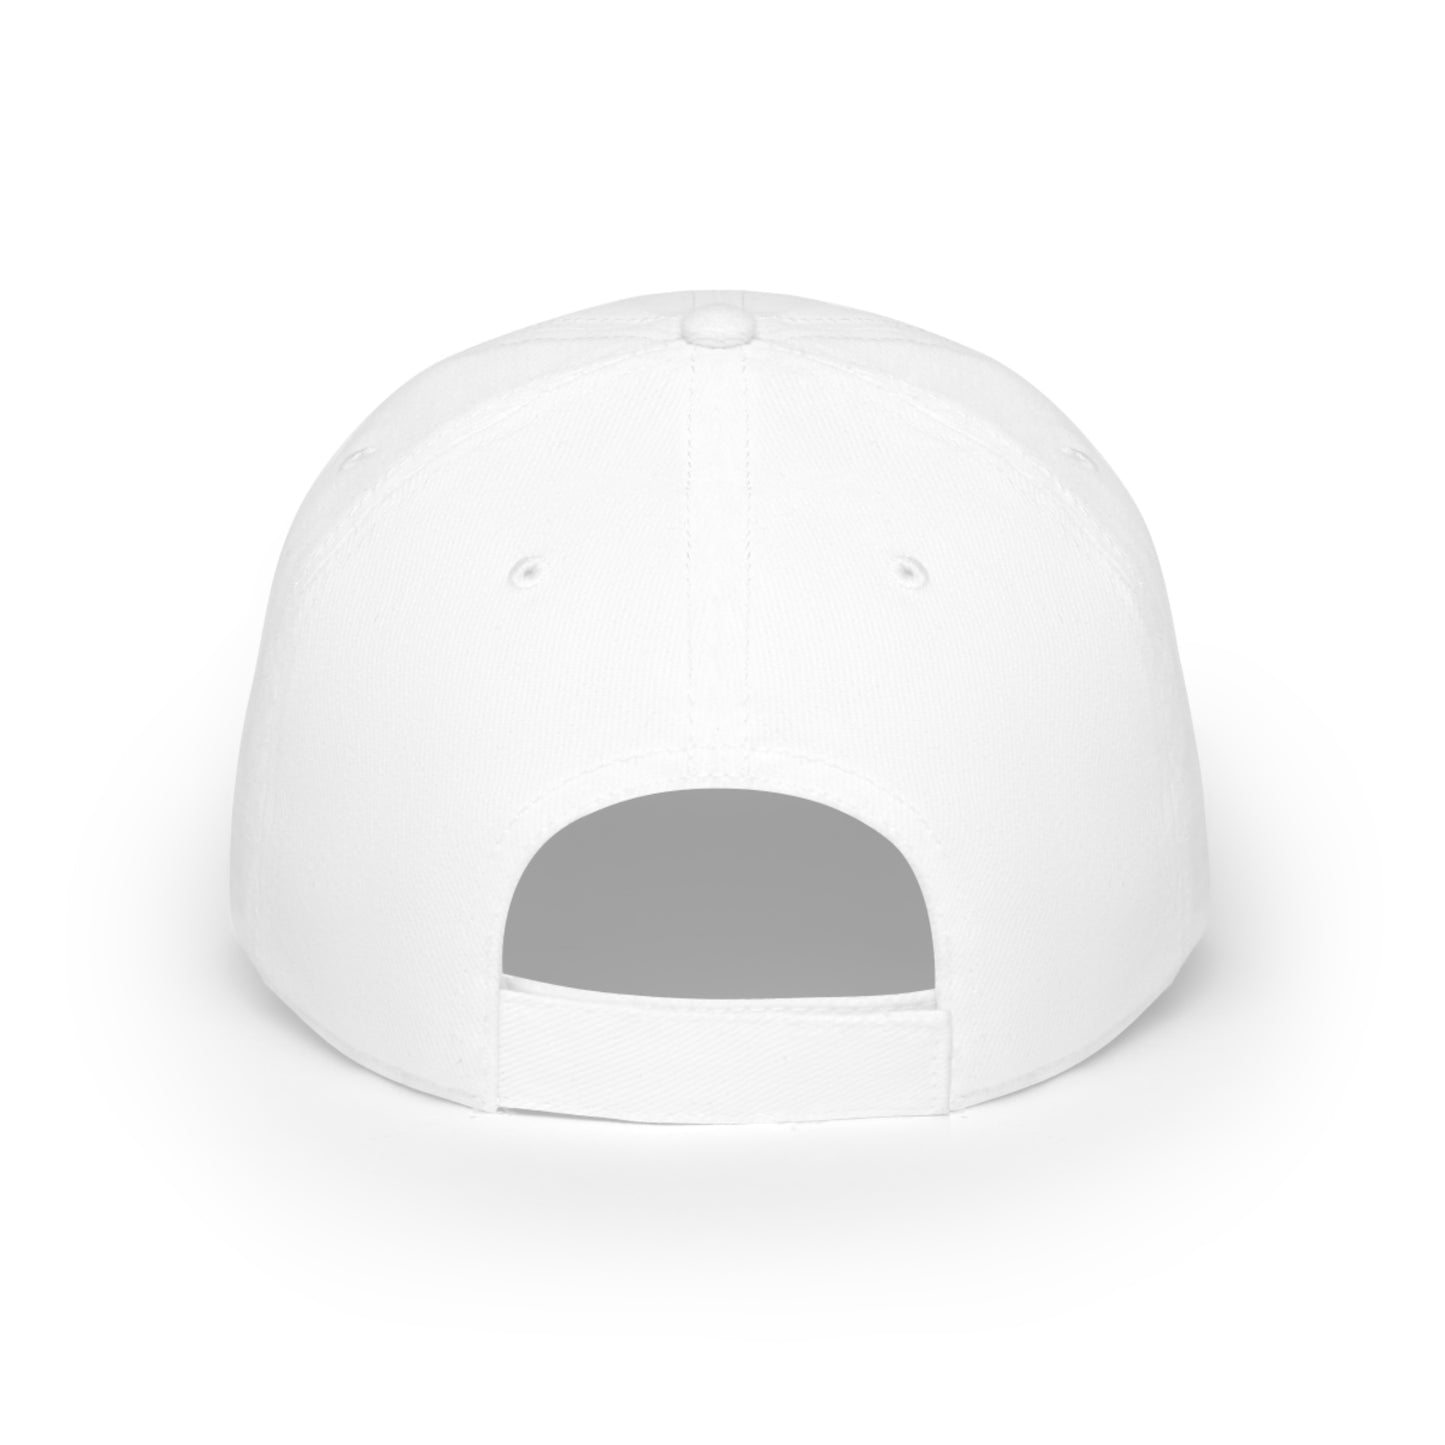 WAI'ANAE - Low Profile Baseball Cap